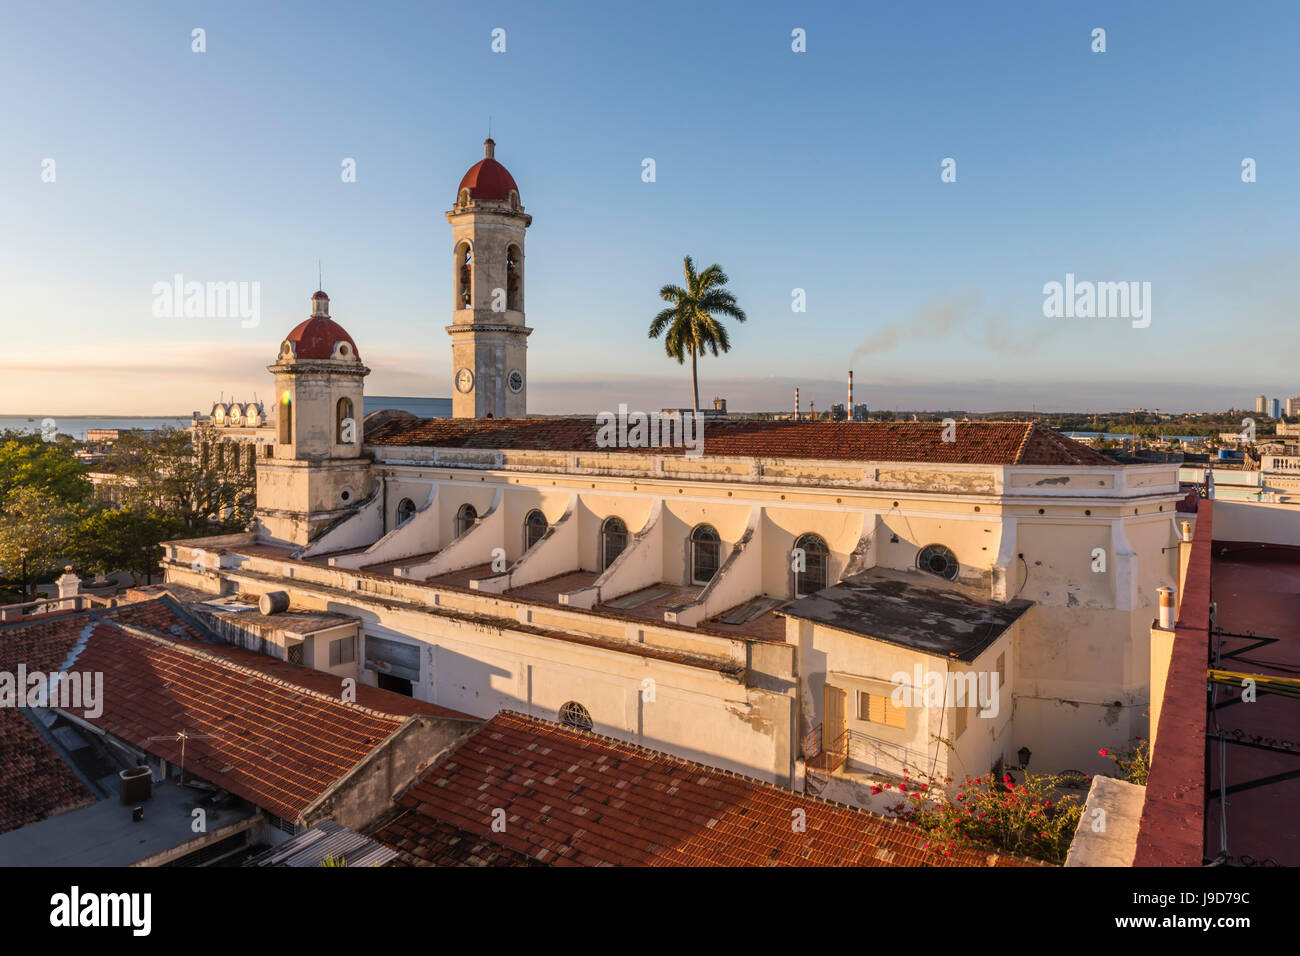 The Catedral de la Purisima Concepcion in Plaza Jose Marti, Cienfuegos, UNESCO World Heritage Site, Cuba, West Indies, Caribbean Stock Photo